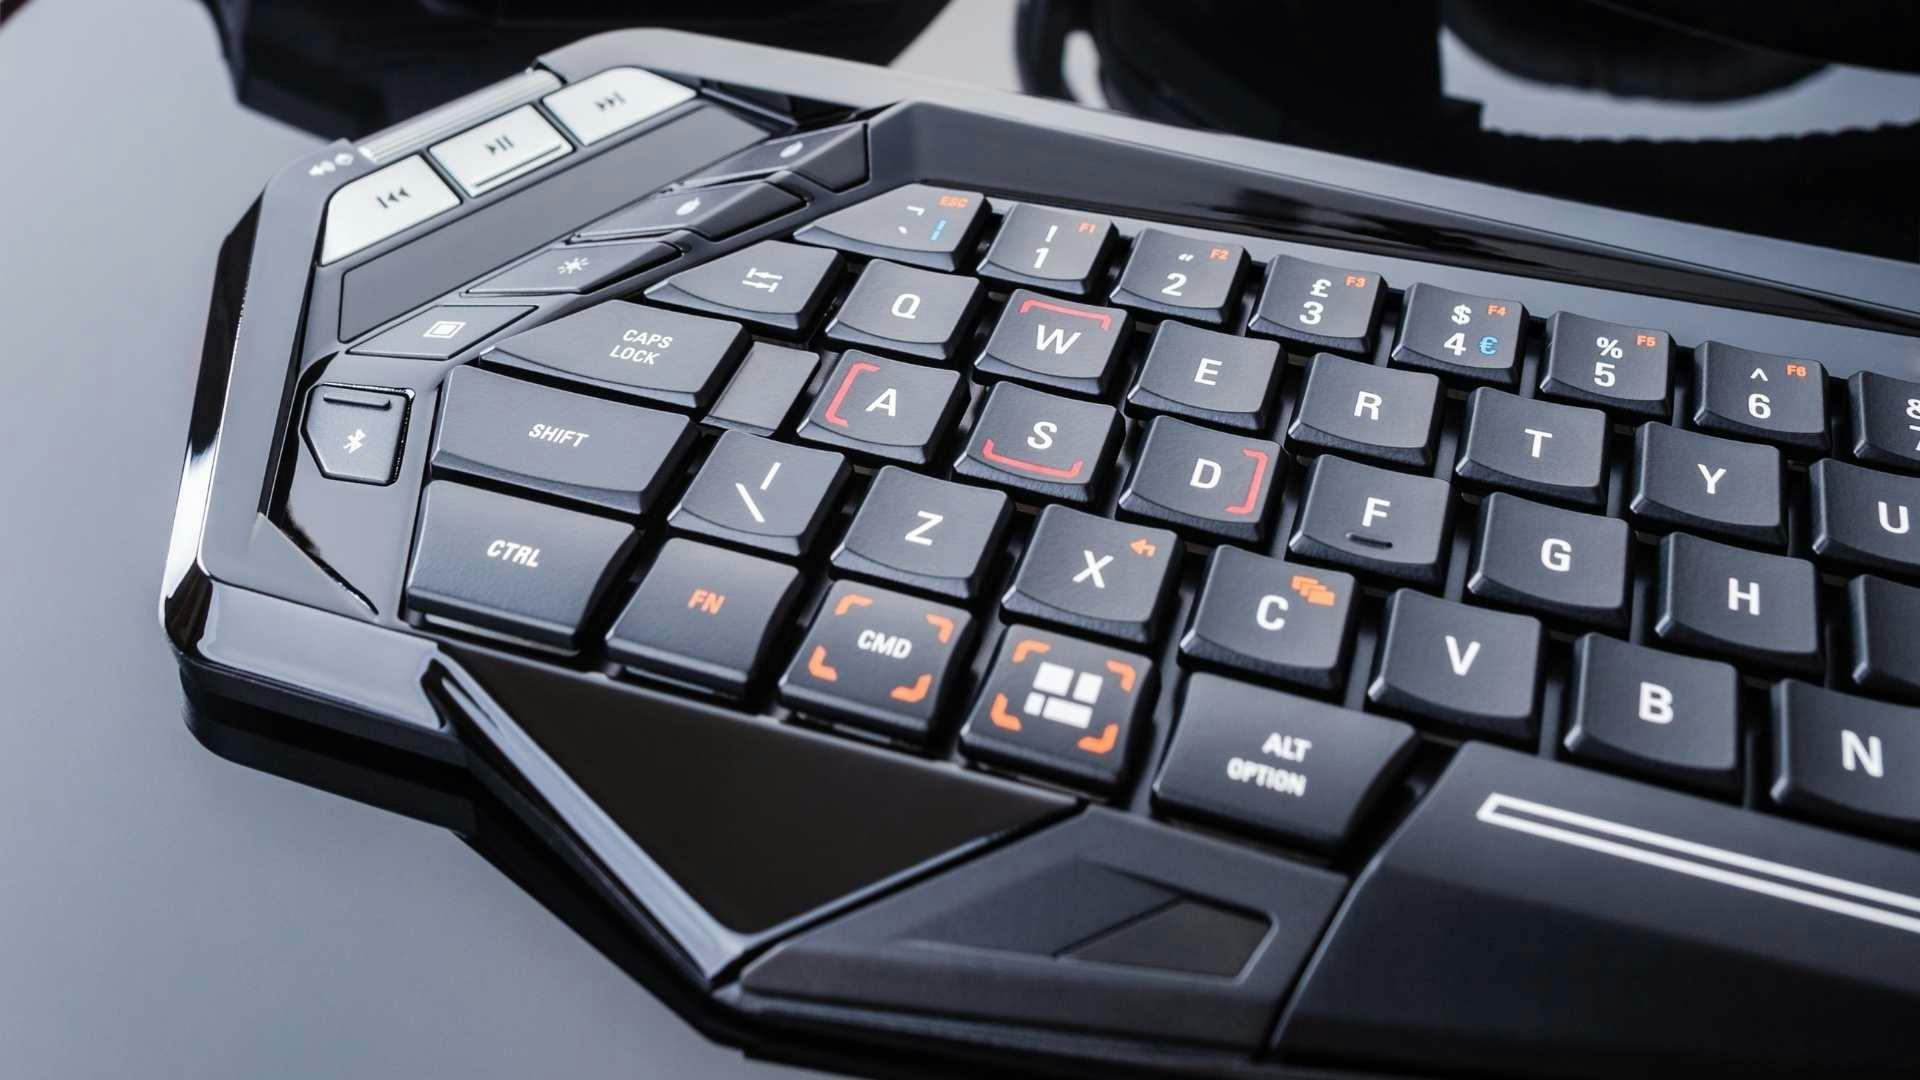 Top 5 Best Gaming Keyboards to Buy under 5000 in 2021